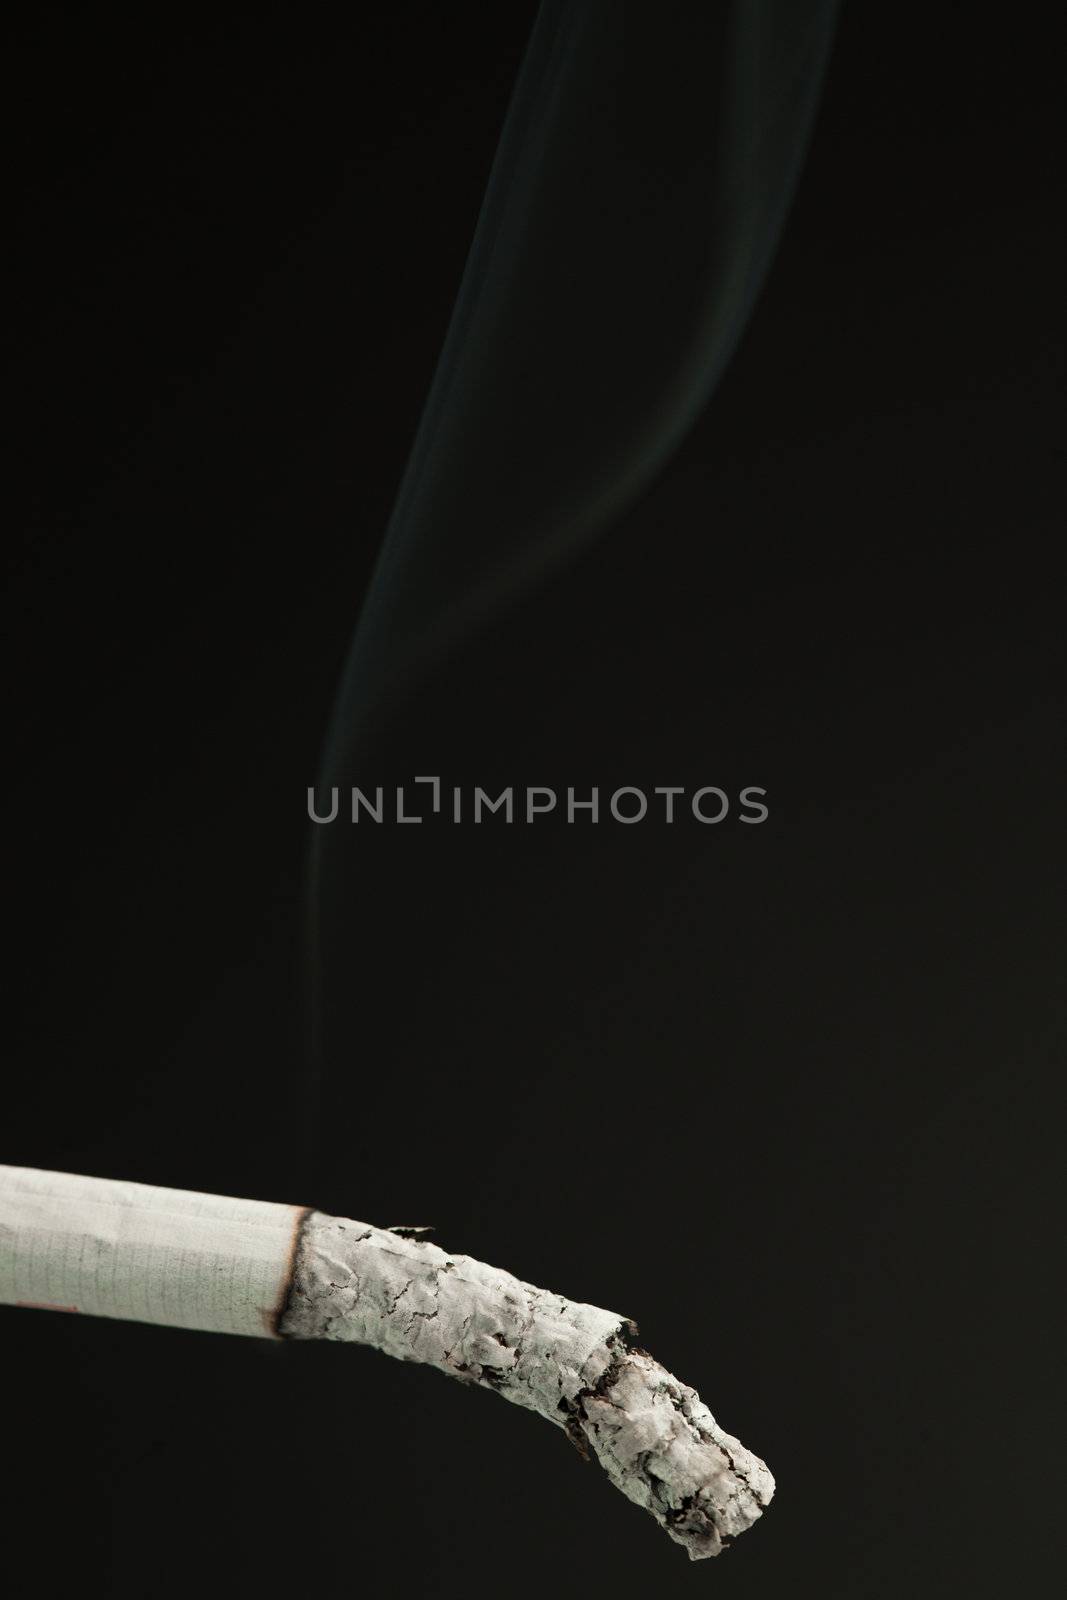 Ash of cigarette by Wavebreakmedia